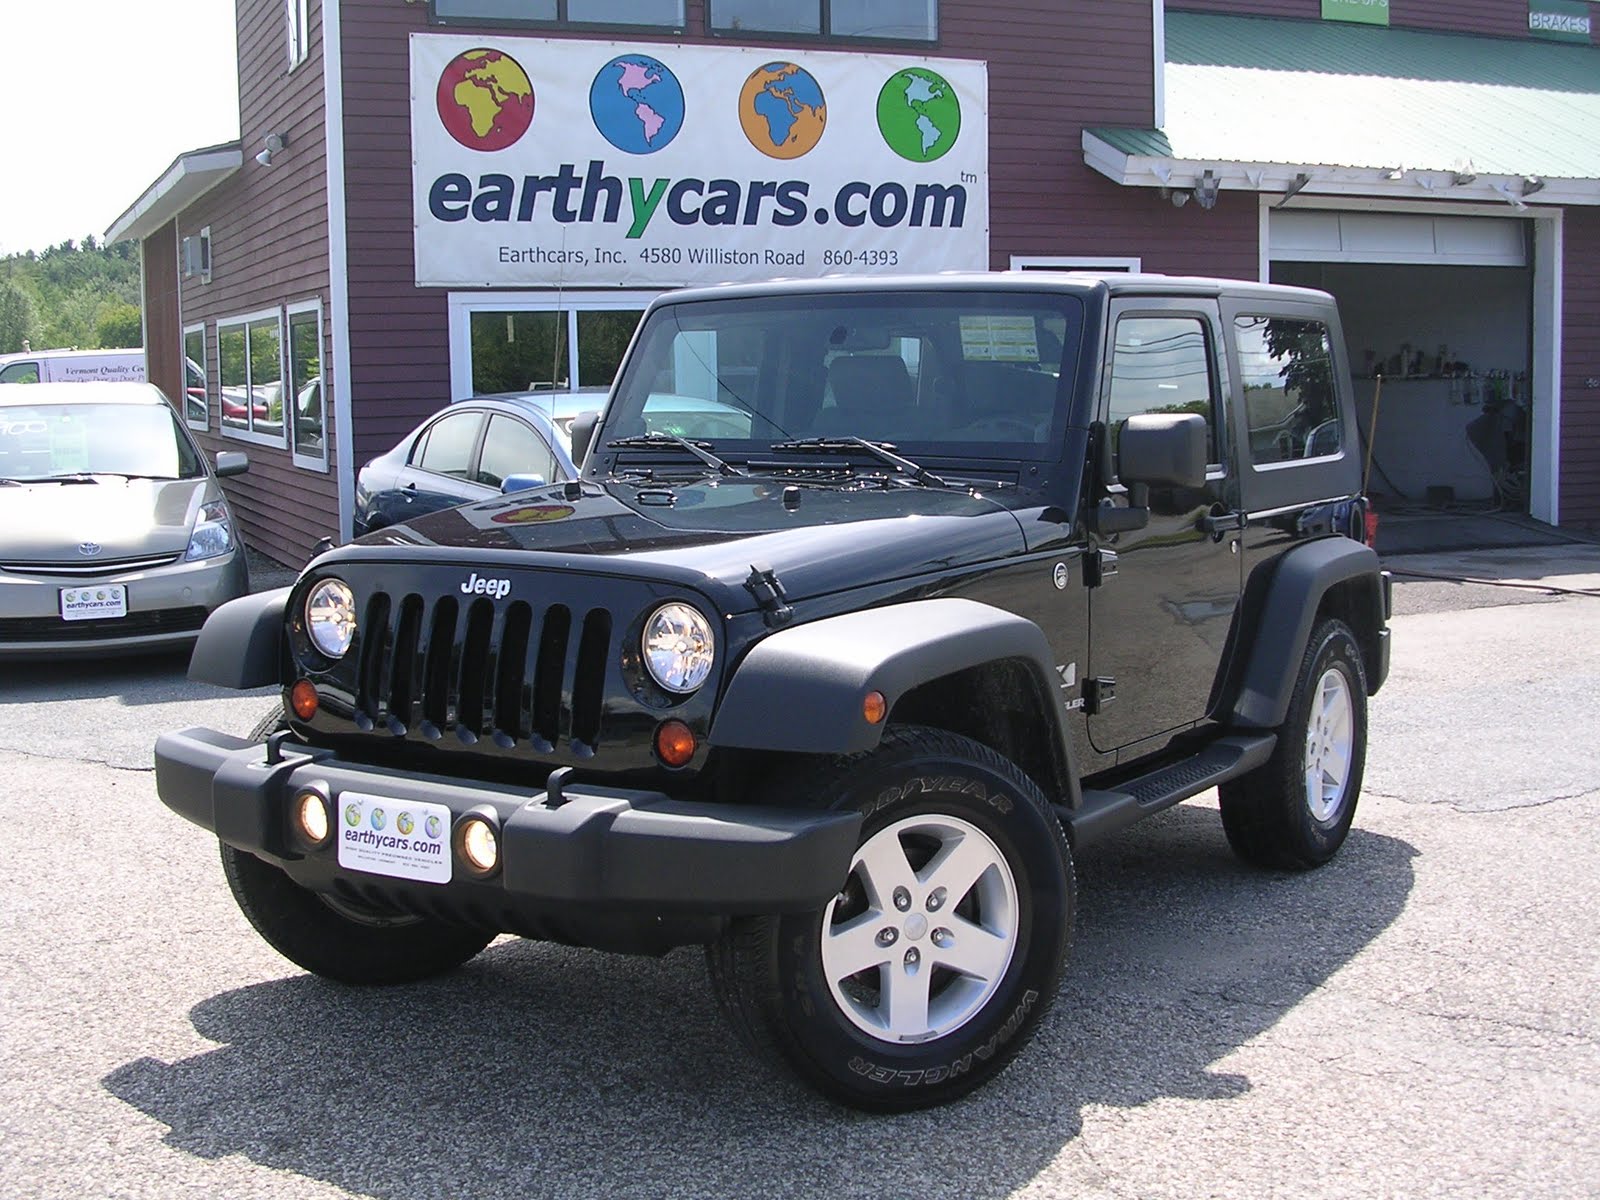 Earthy Cars Blog: EARTHY CAR OF THE WEEK: 2008 Black Jeep Wrangler